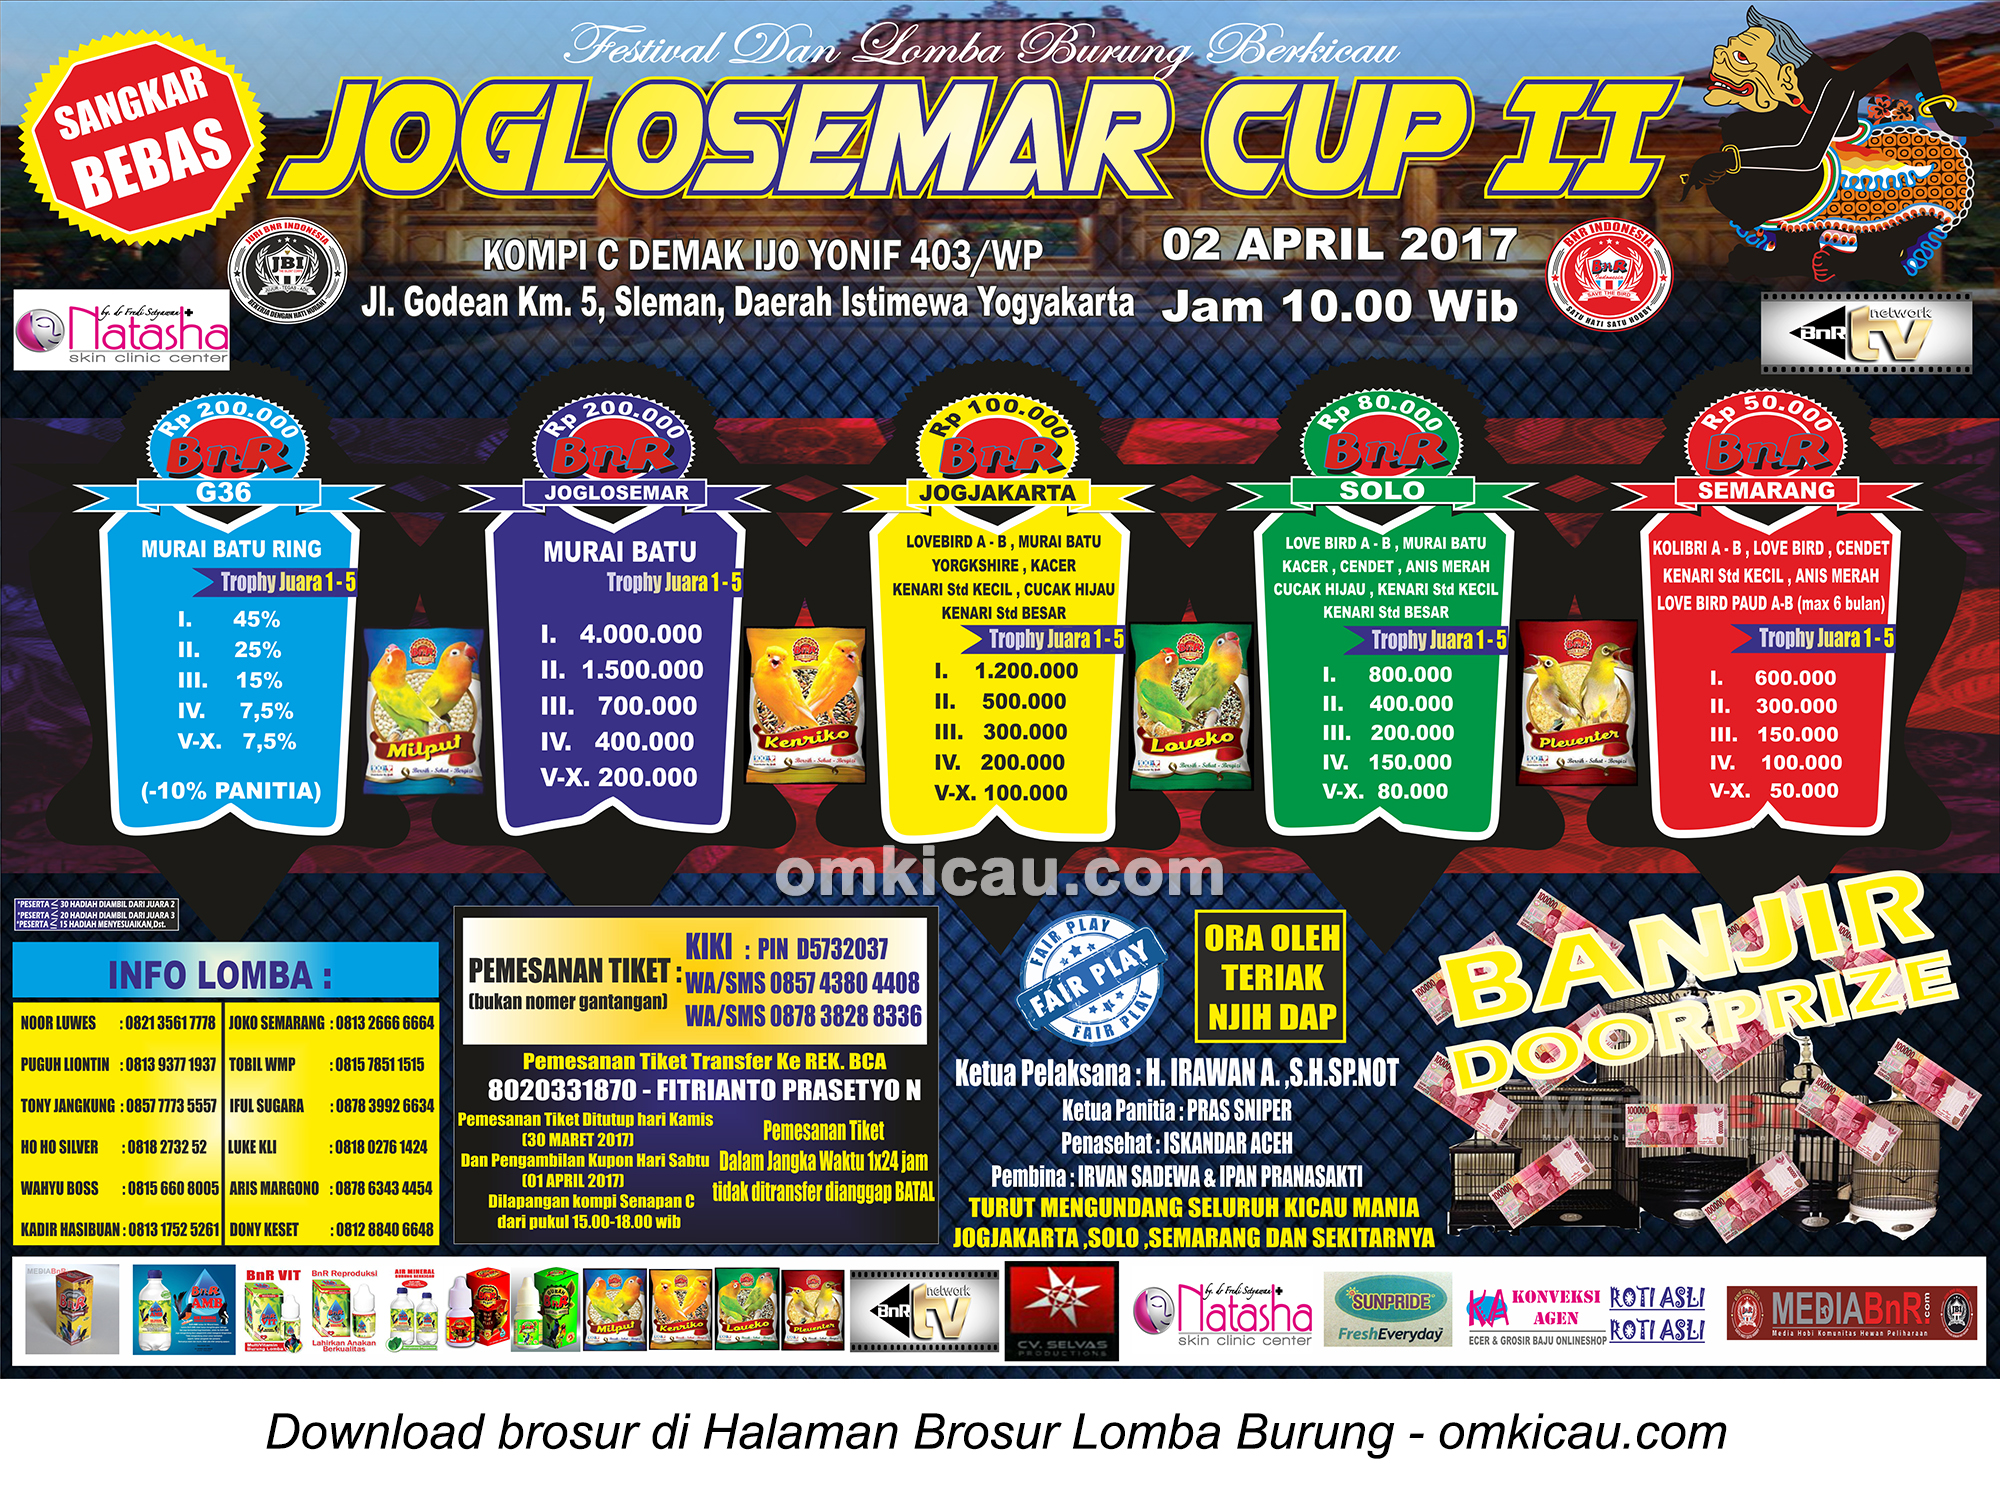 Brosur Lomba Burung Berkicau Joglosemar Cup II, Jogja, 2 April 2017